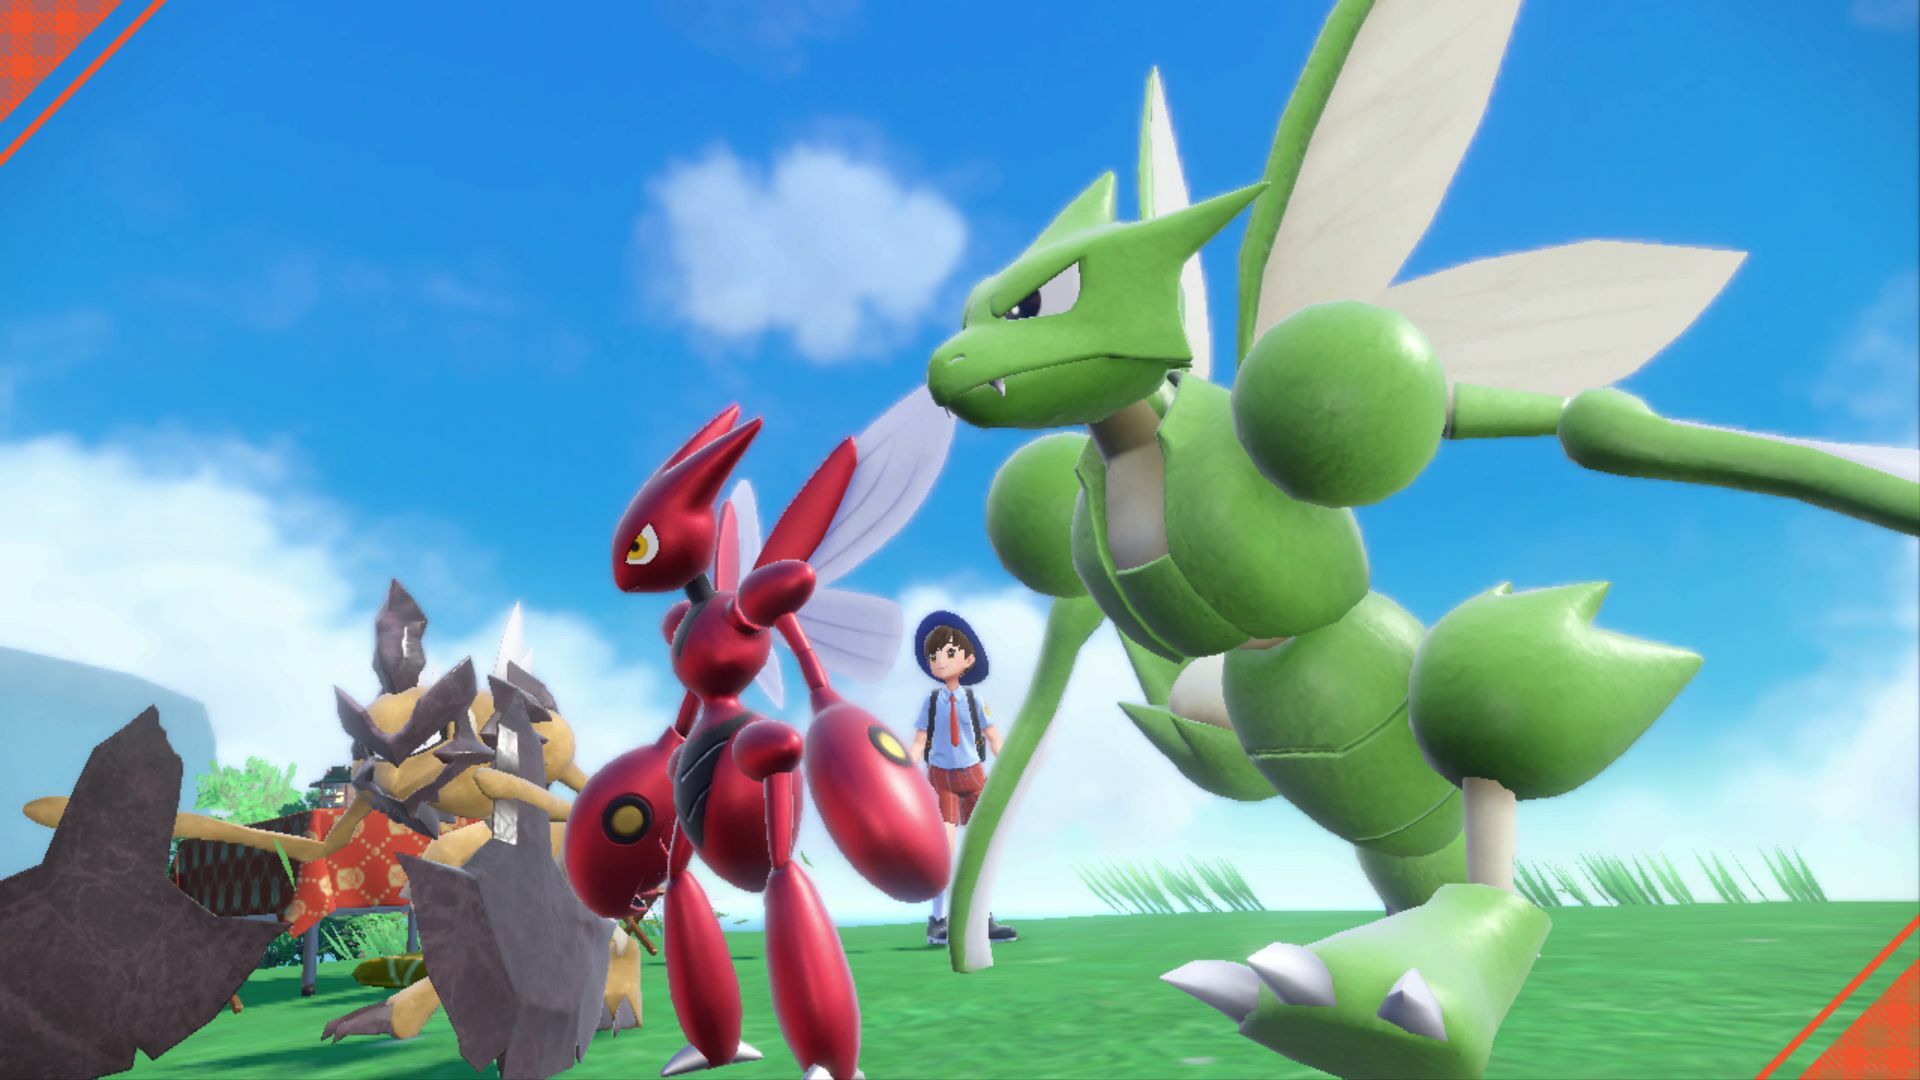 Scyther, Scizor, and Kleavor with Pokemon trainer